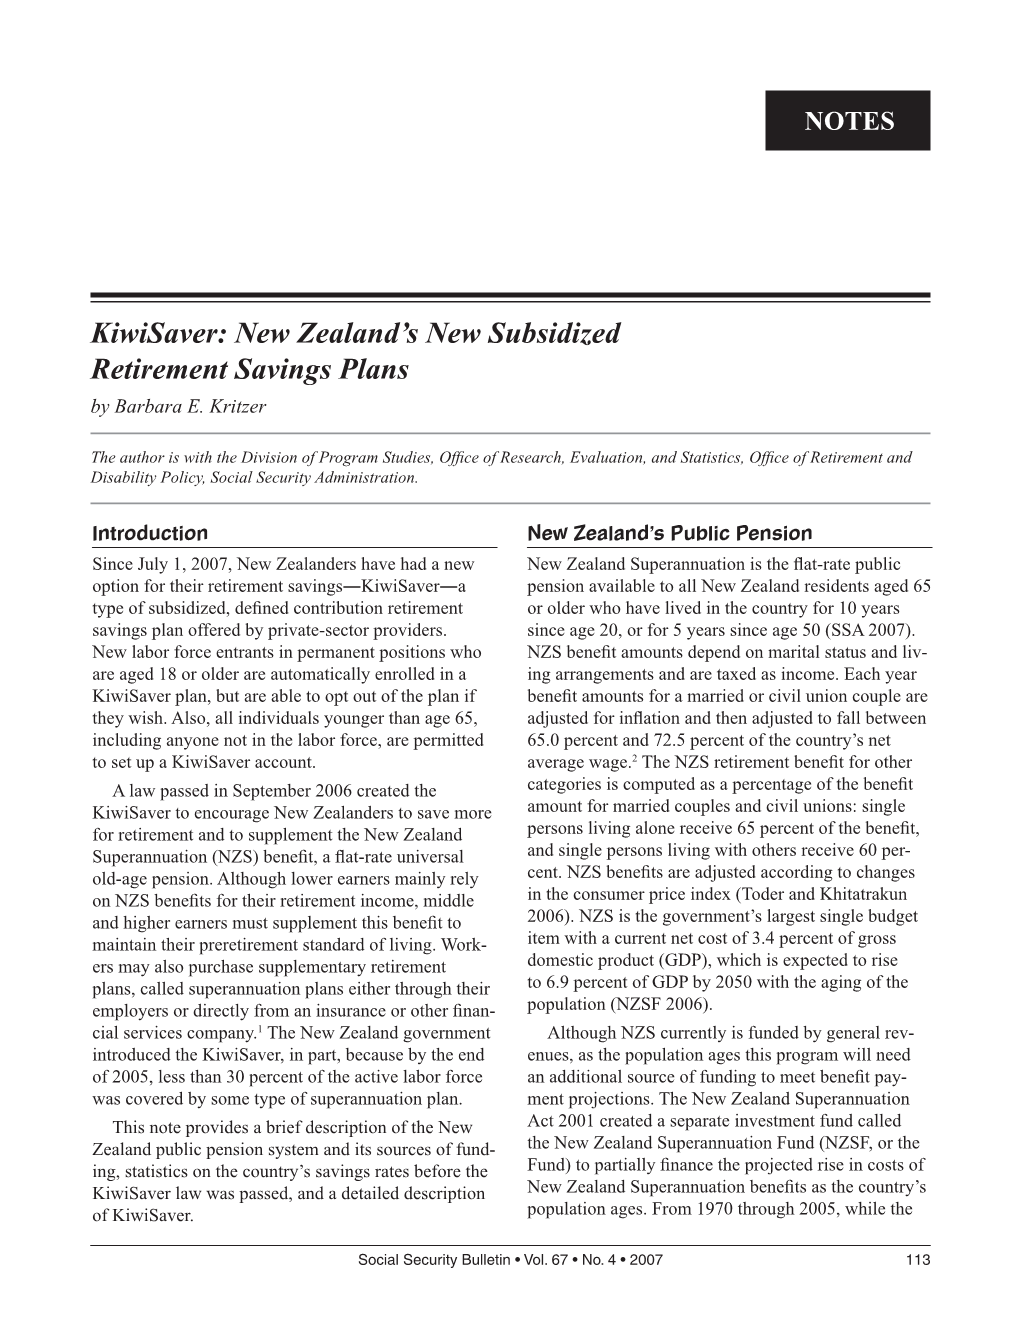 Kiwisaver: New Zealand's New Subsidized Retirement Savings Plans